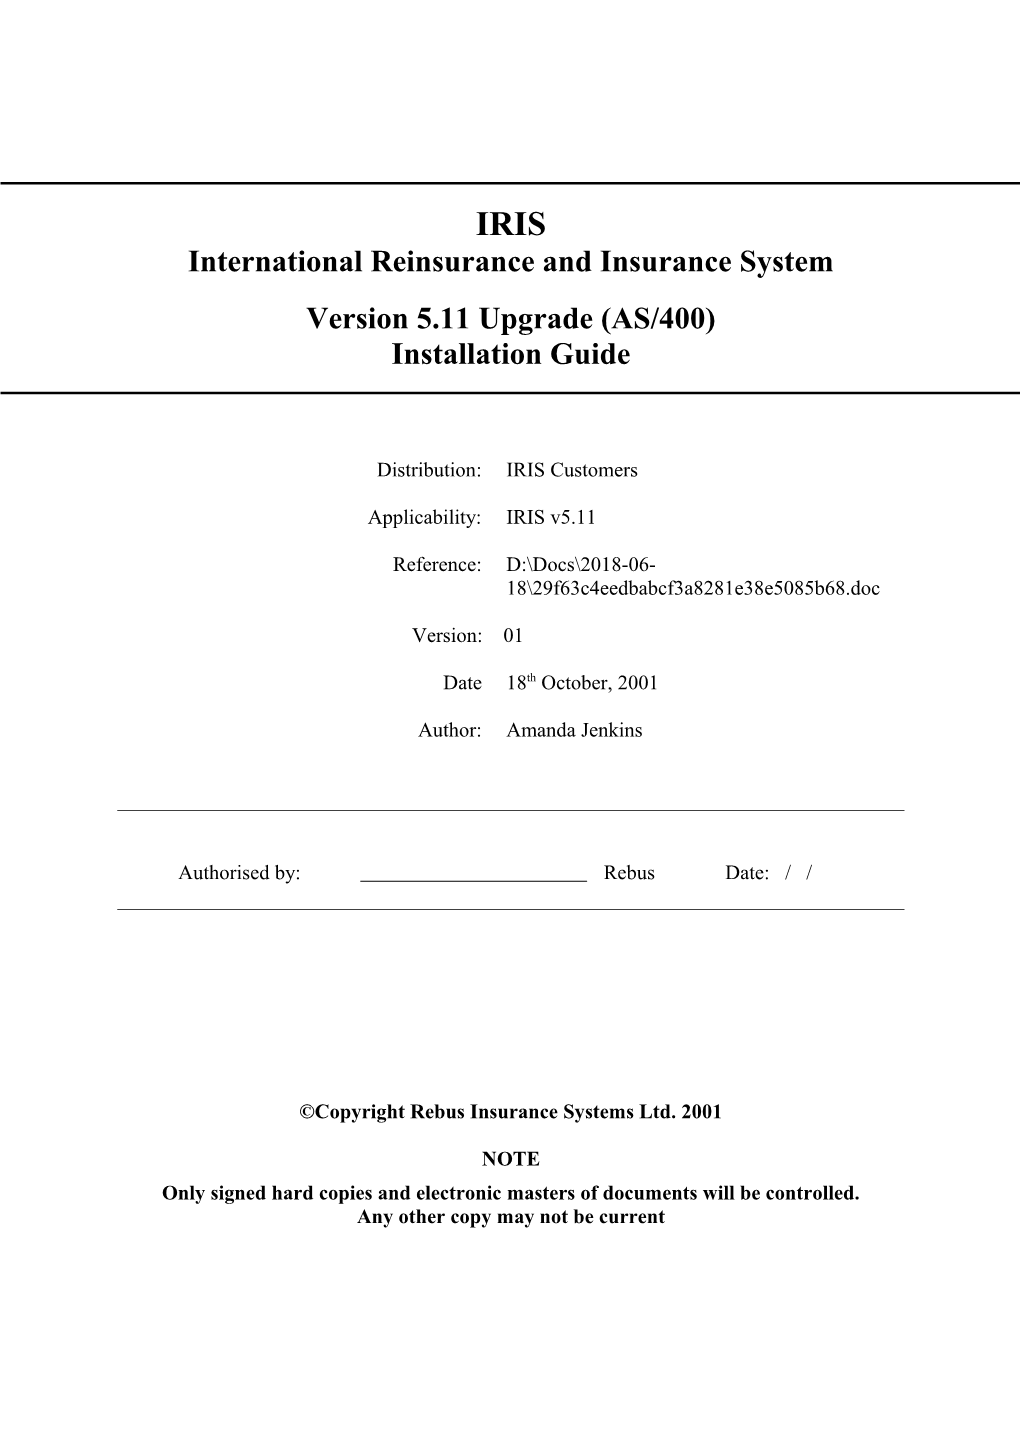 IRIS - Version 2.9.0 - Upgrade Installation Guide